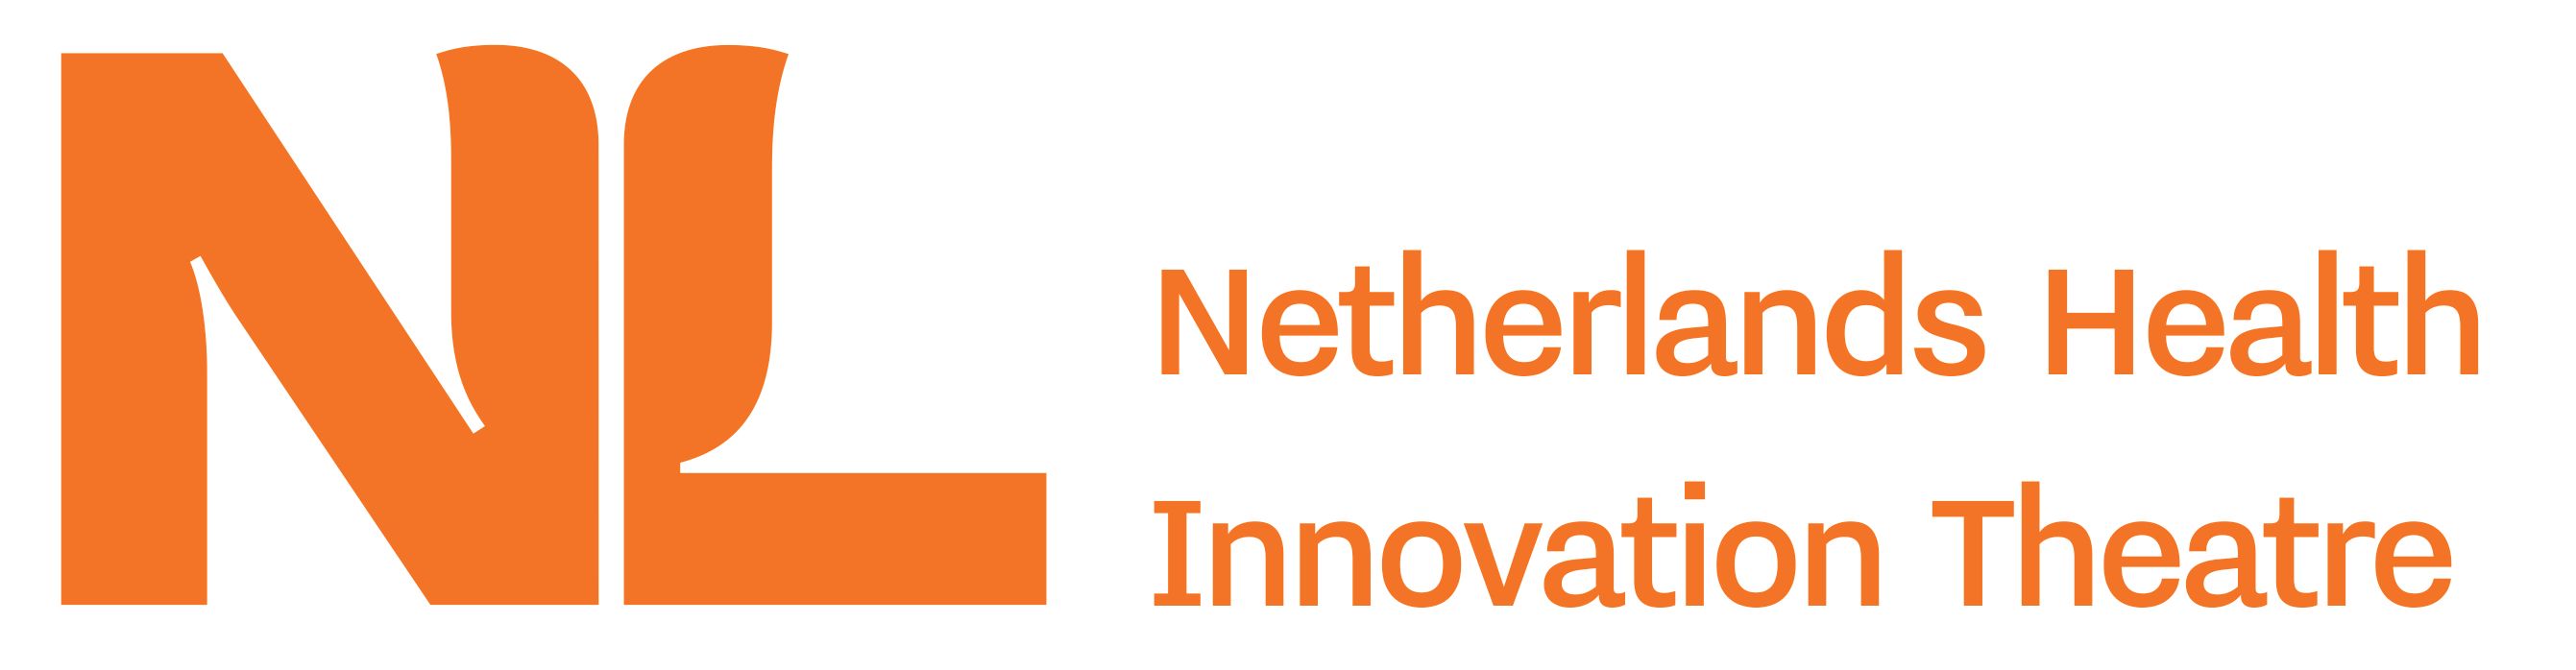 Netherlands Health Innovation Theatre